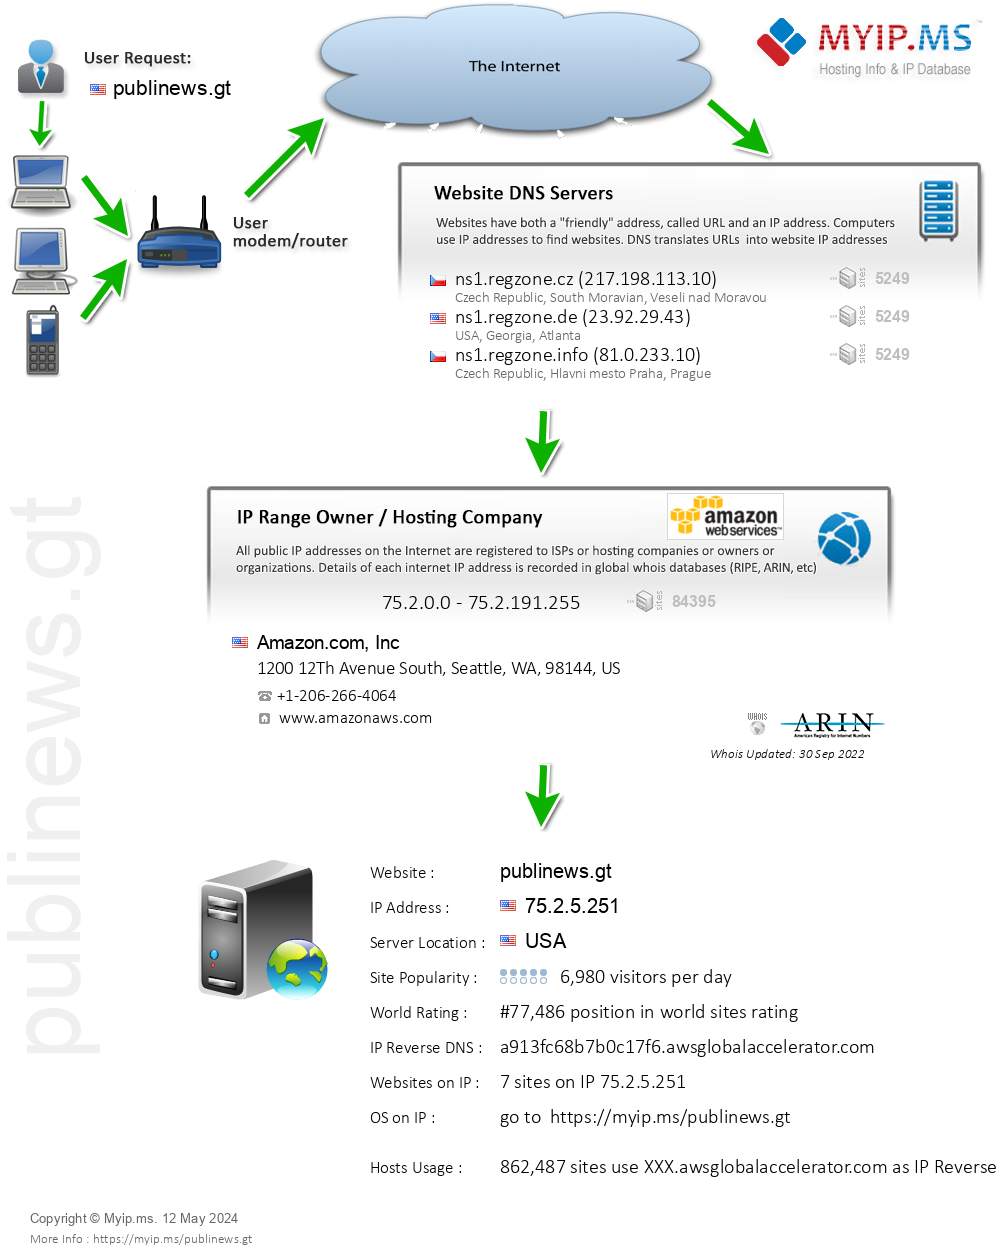 Publinews.gt - Website Hosting Visual IP Diagram